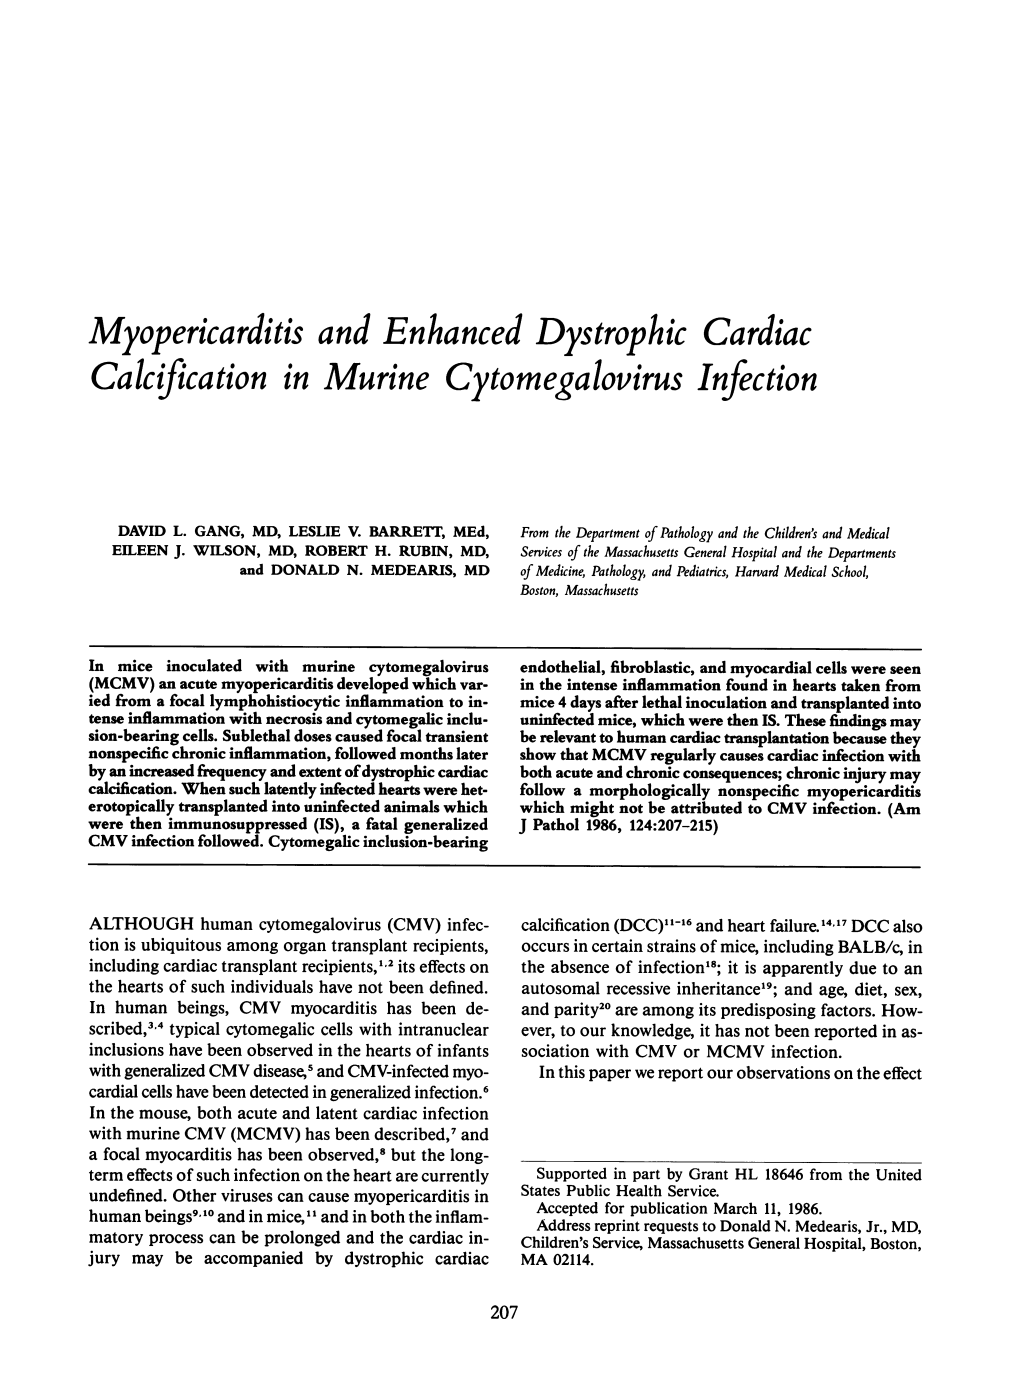 Myopericarditis and Enhanced Dystrophic Cardiac Calcfication in Murine Cytomegalovirus Infection